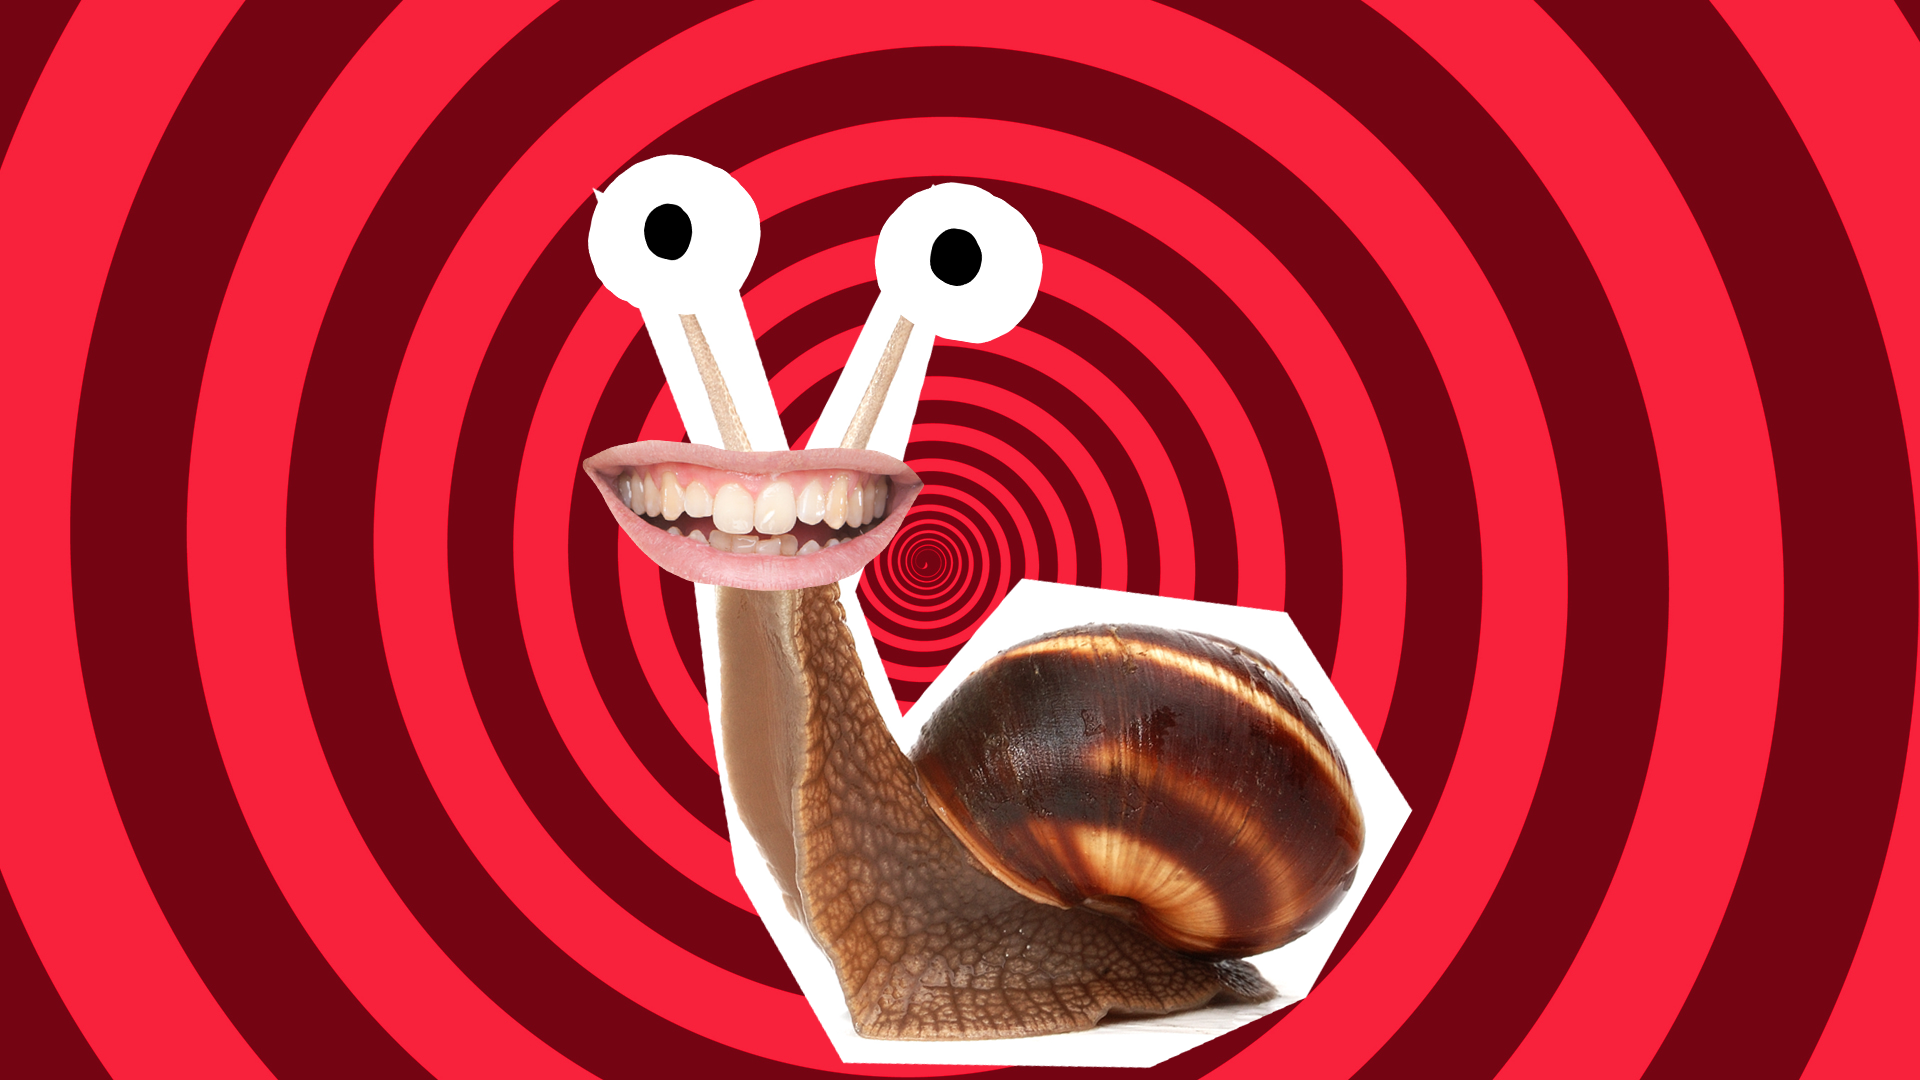 A grinning brown snail